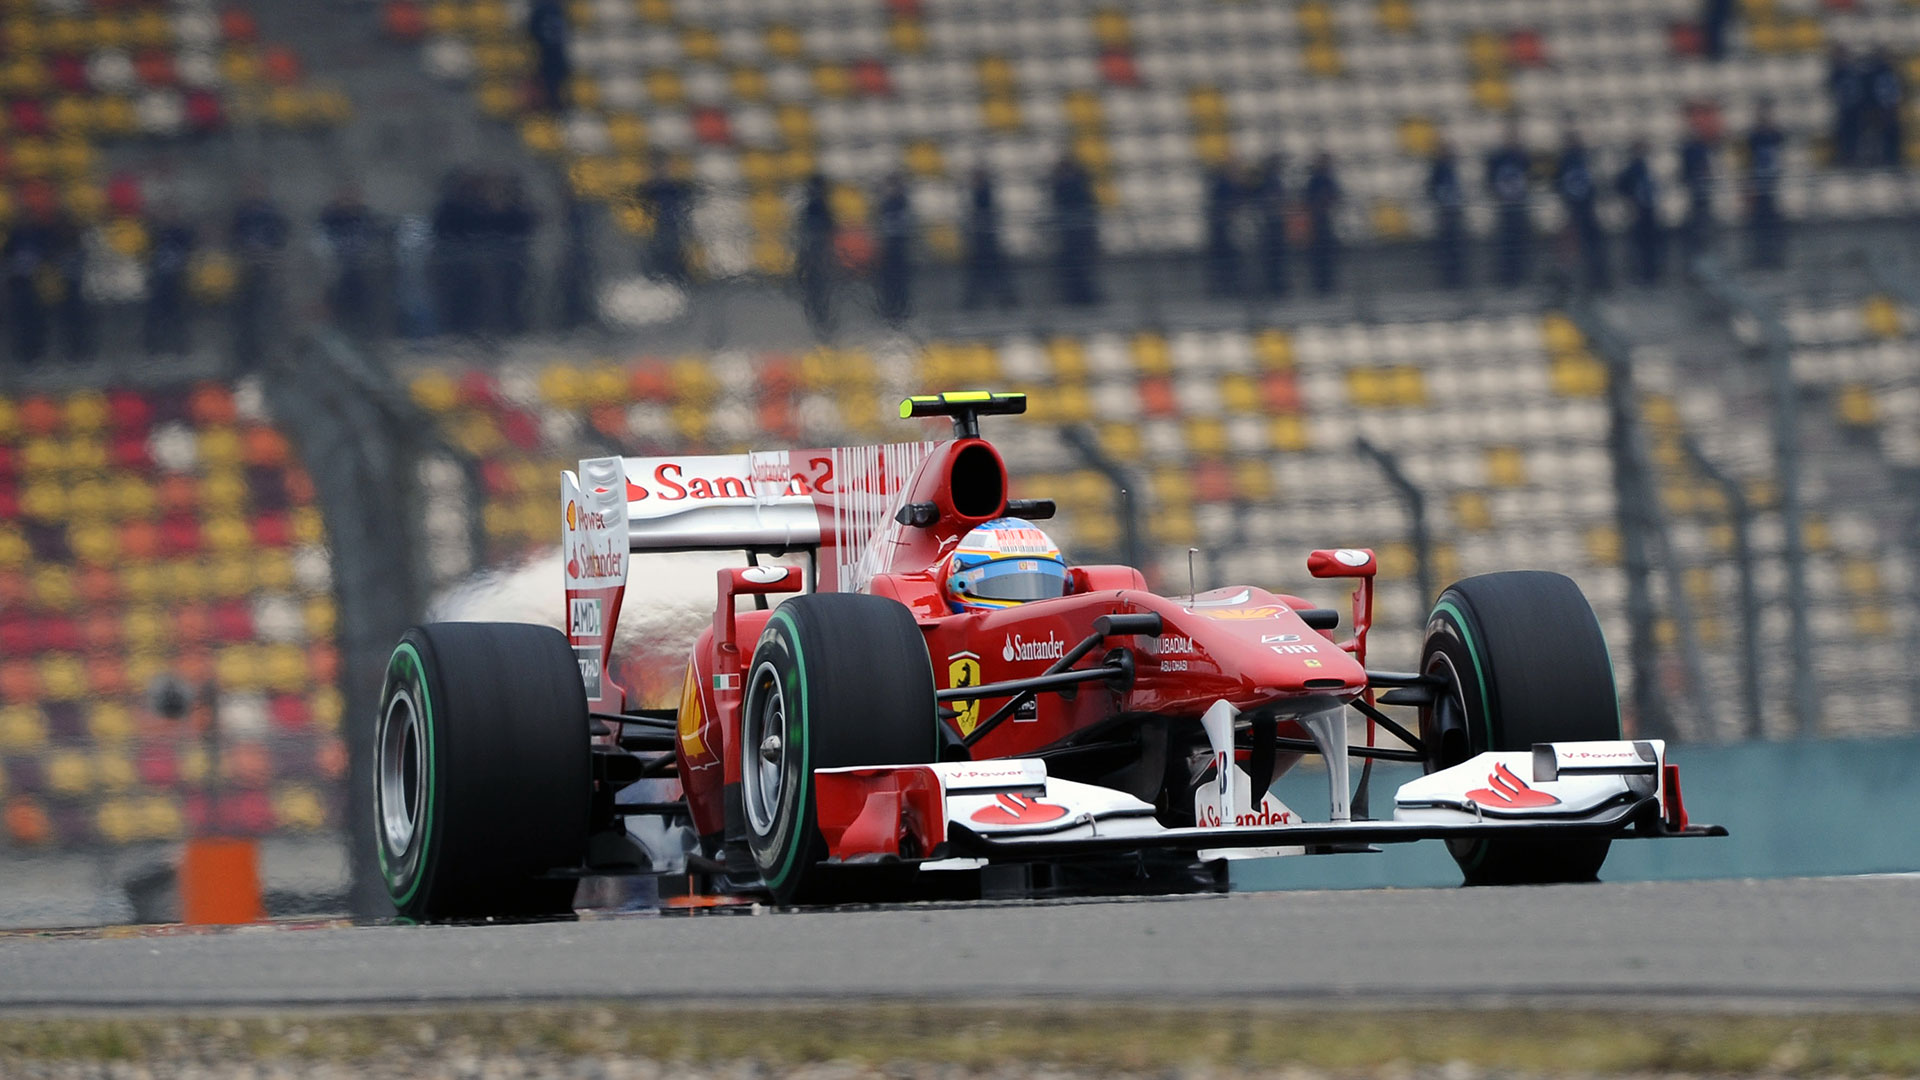 HD Wallpaper Formula Grand Prix Of China